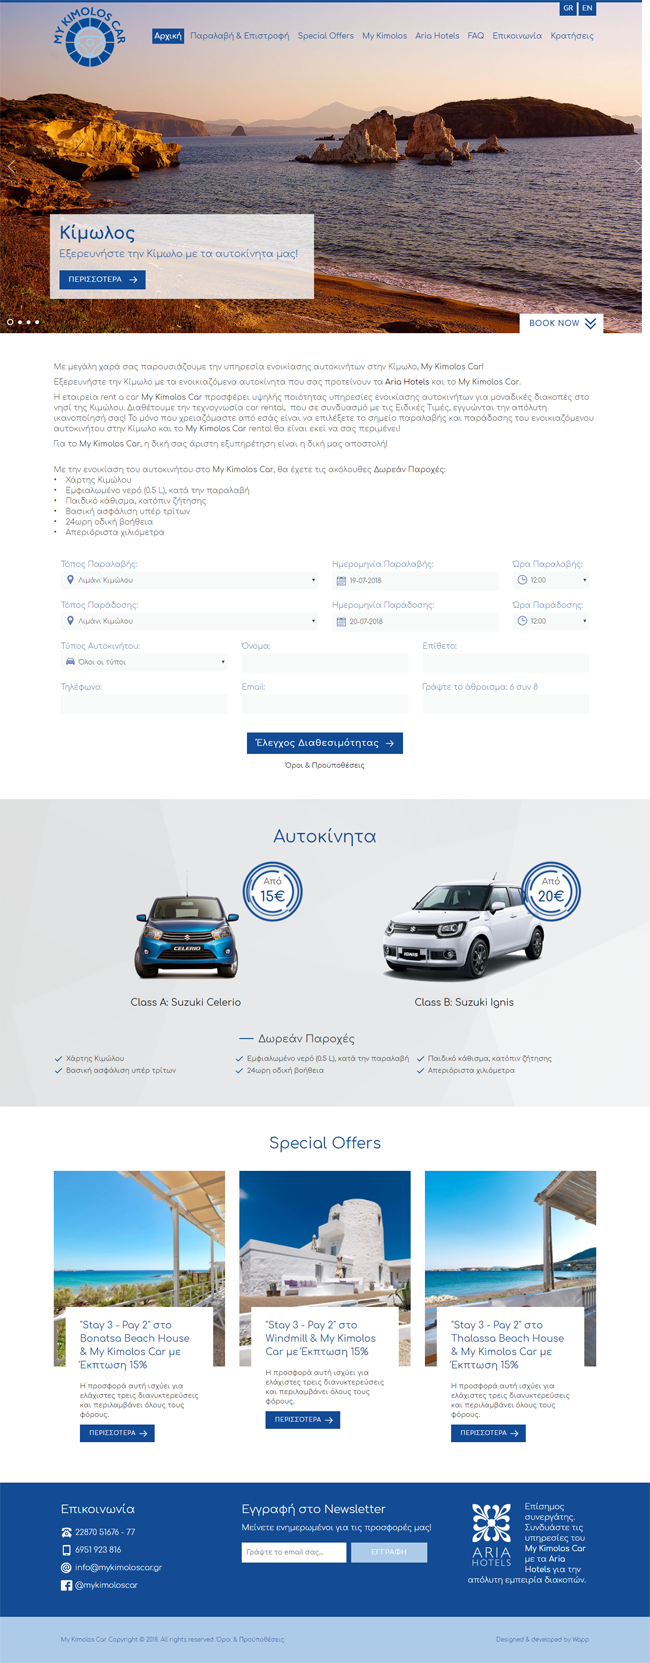 Web application for My Kimolos Car in Kimolos, Cyclades.